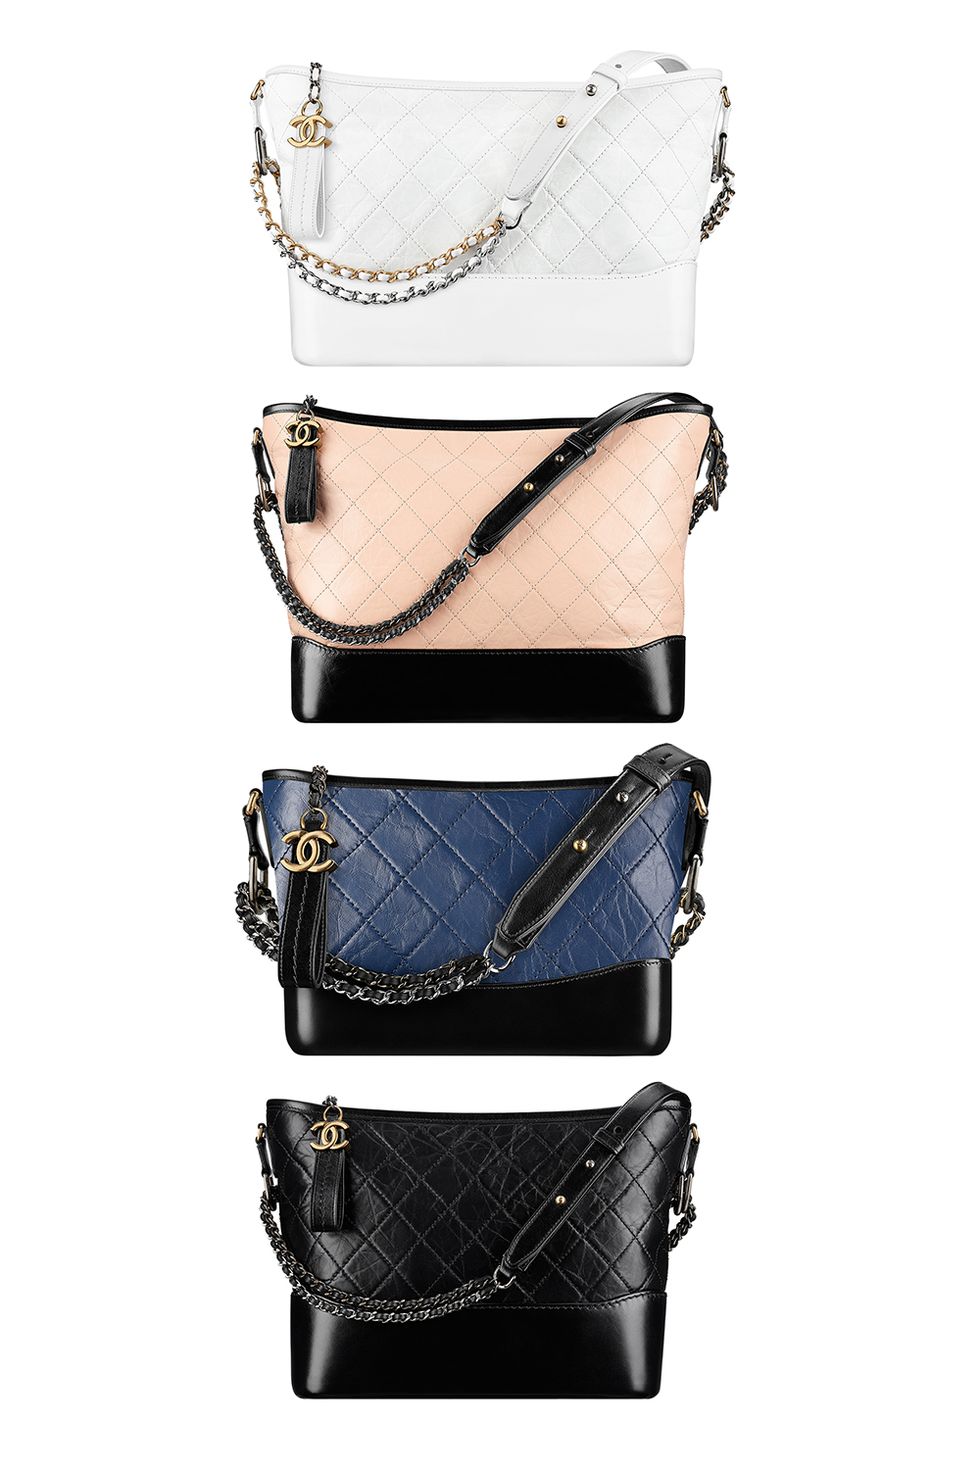 Chanel Neutrals Cue Ball Foldover Bag